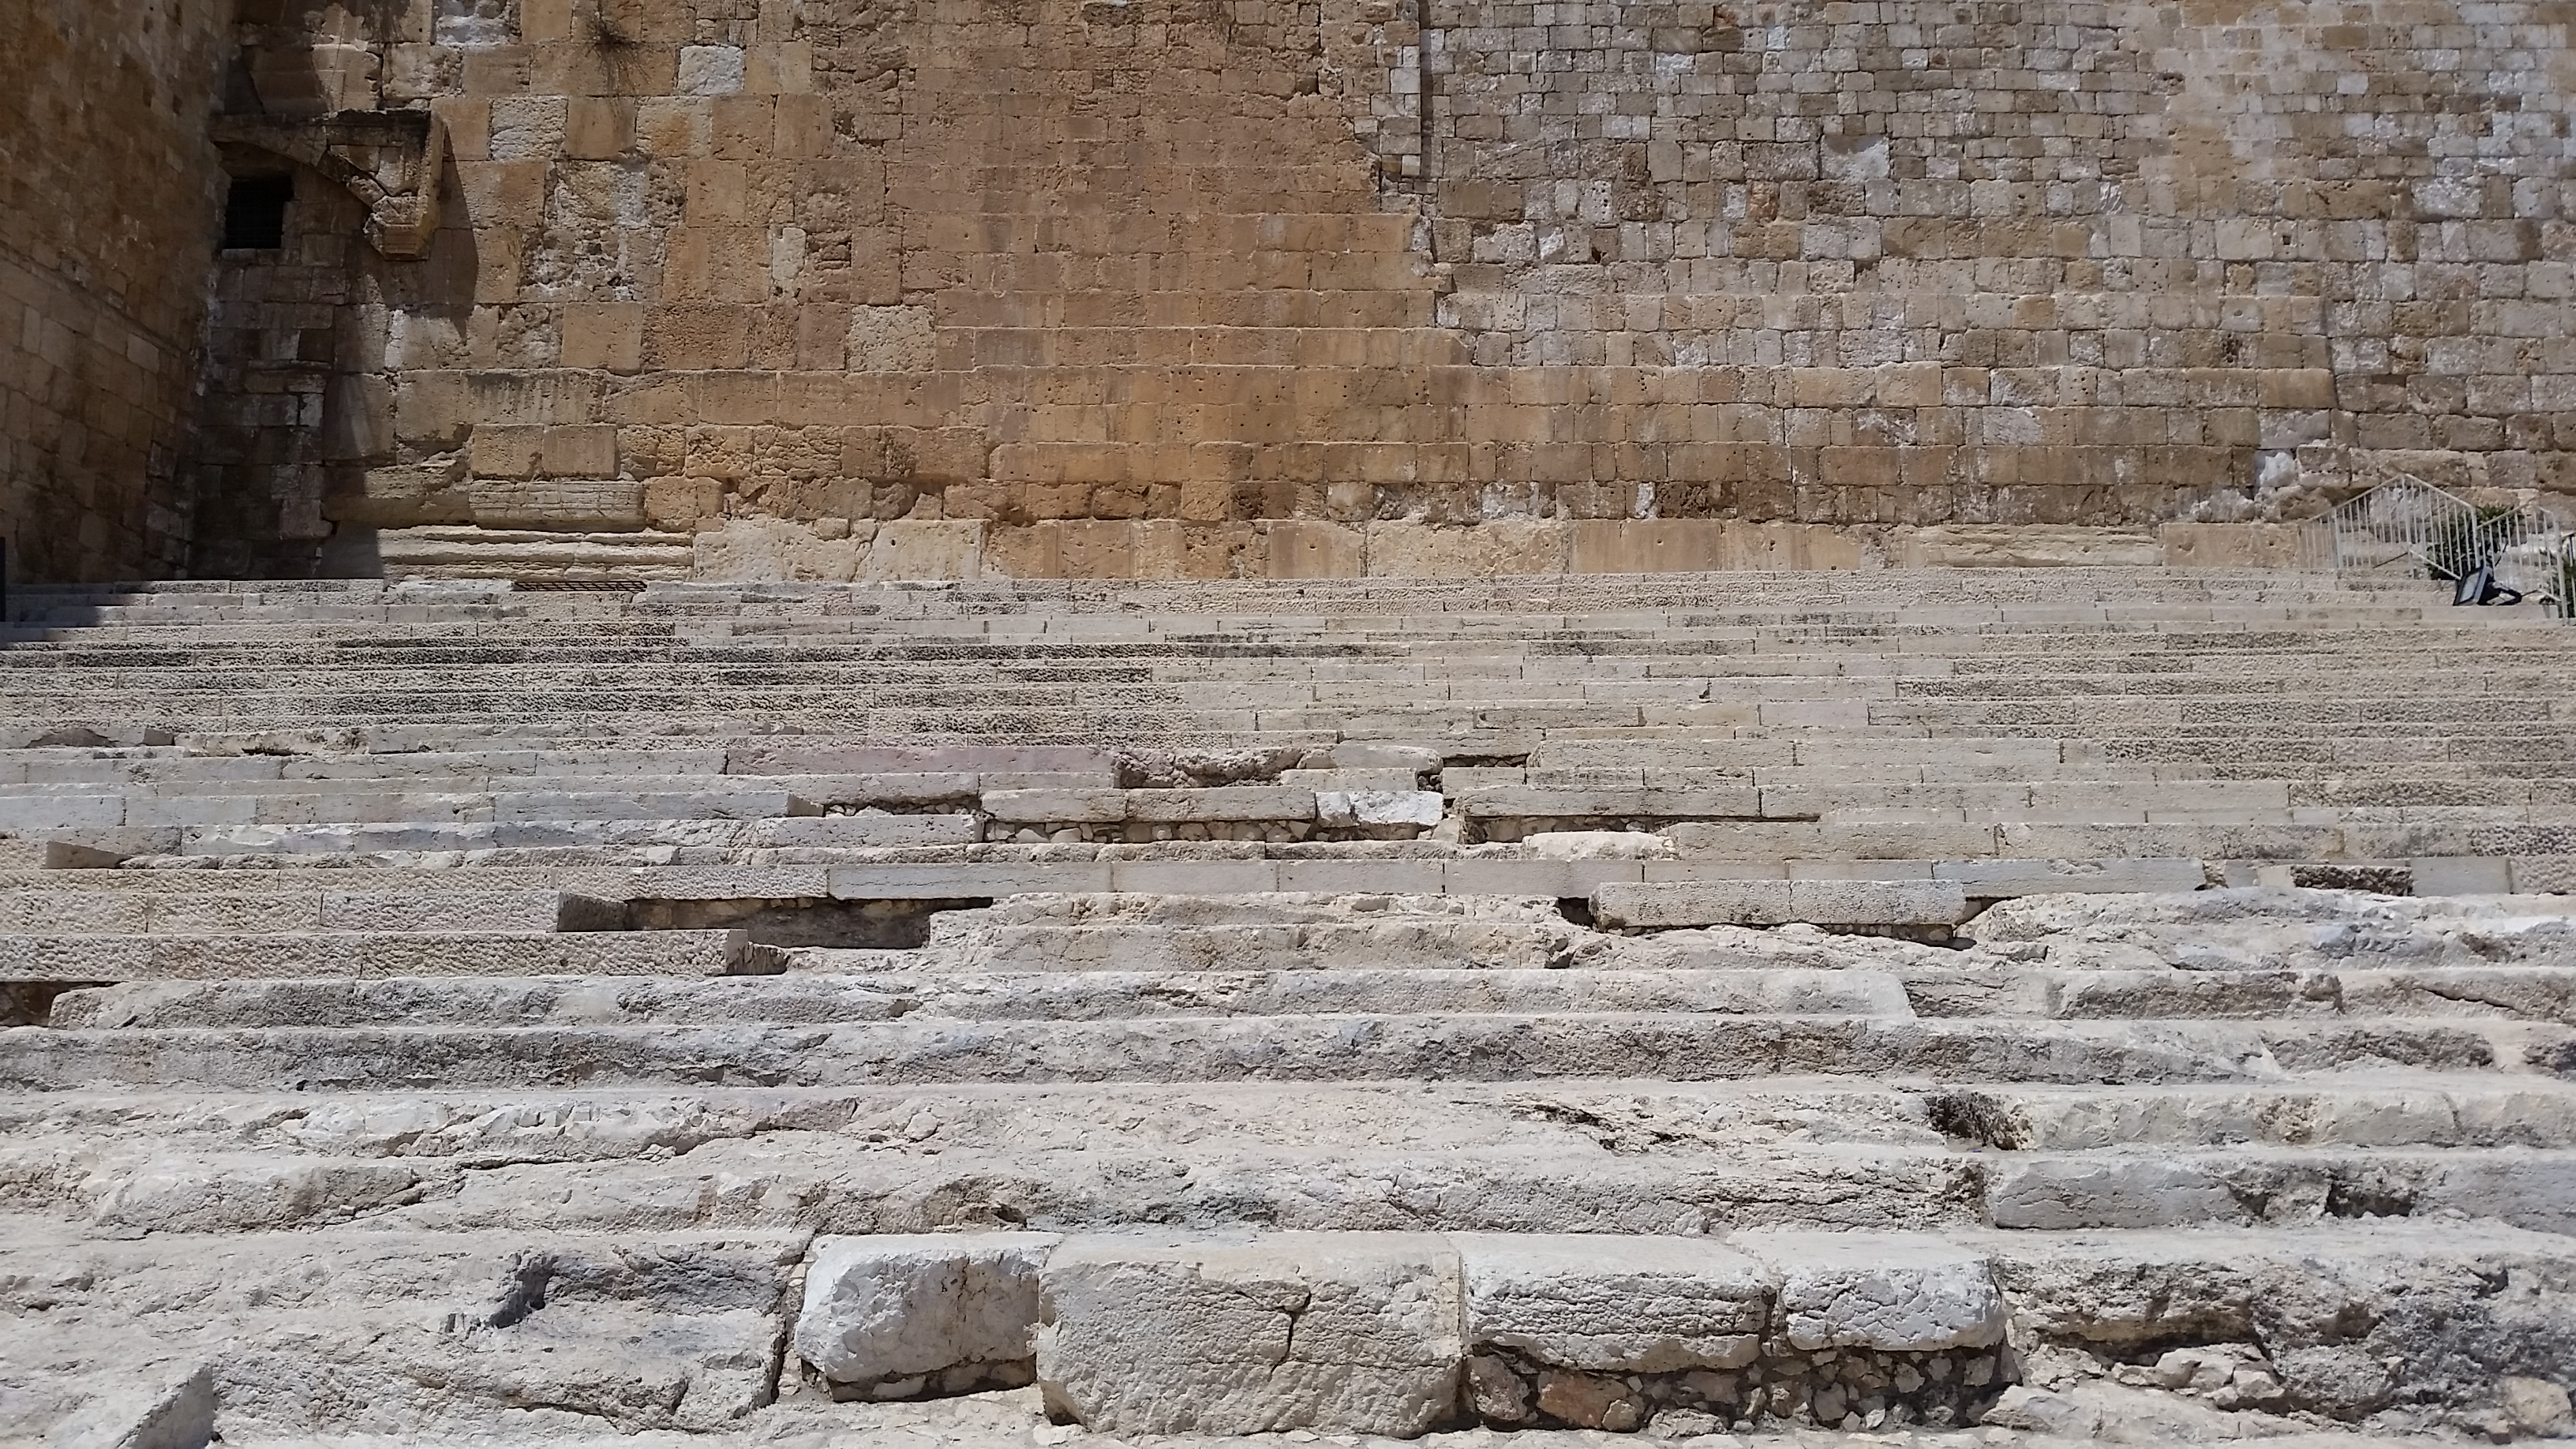 Jerusalem- Old city, archeological site Davidson center at Southern wall
Йерусалим- Стария град, археологически комплекс Дейвид